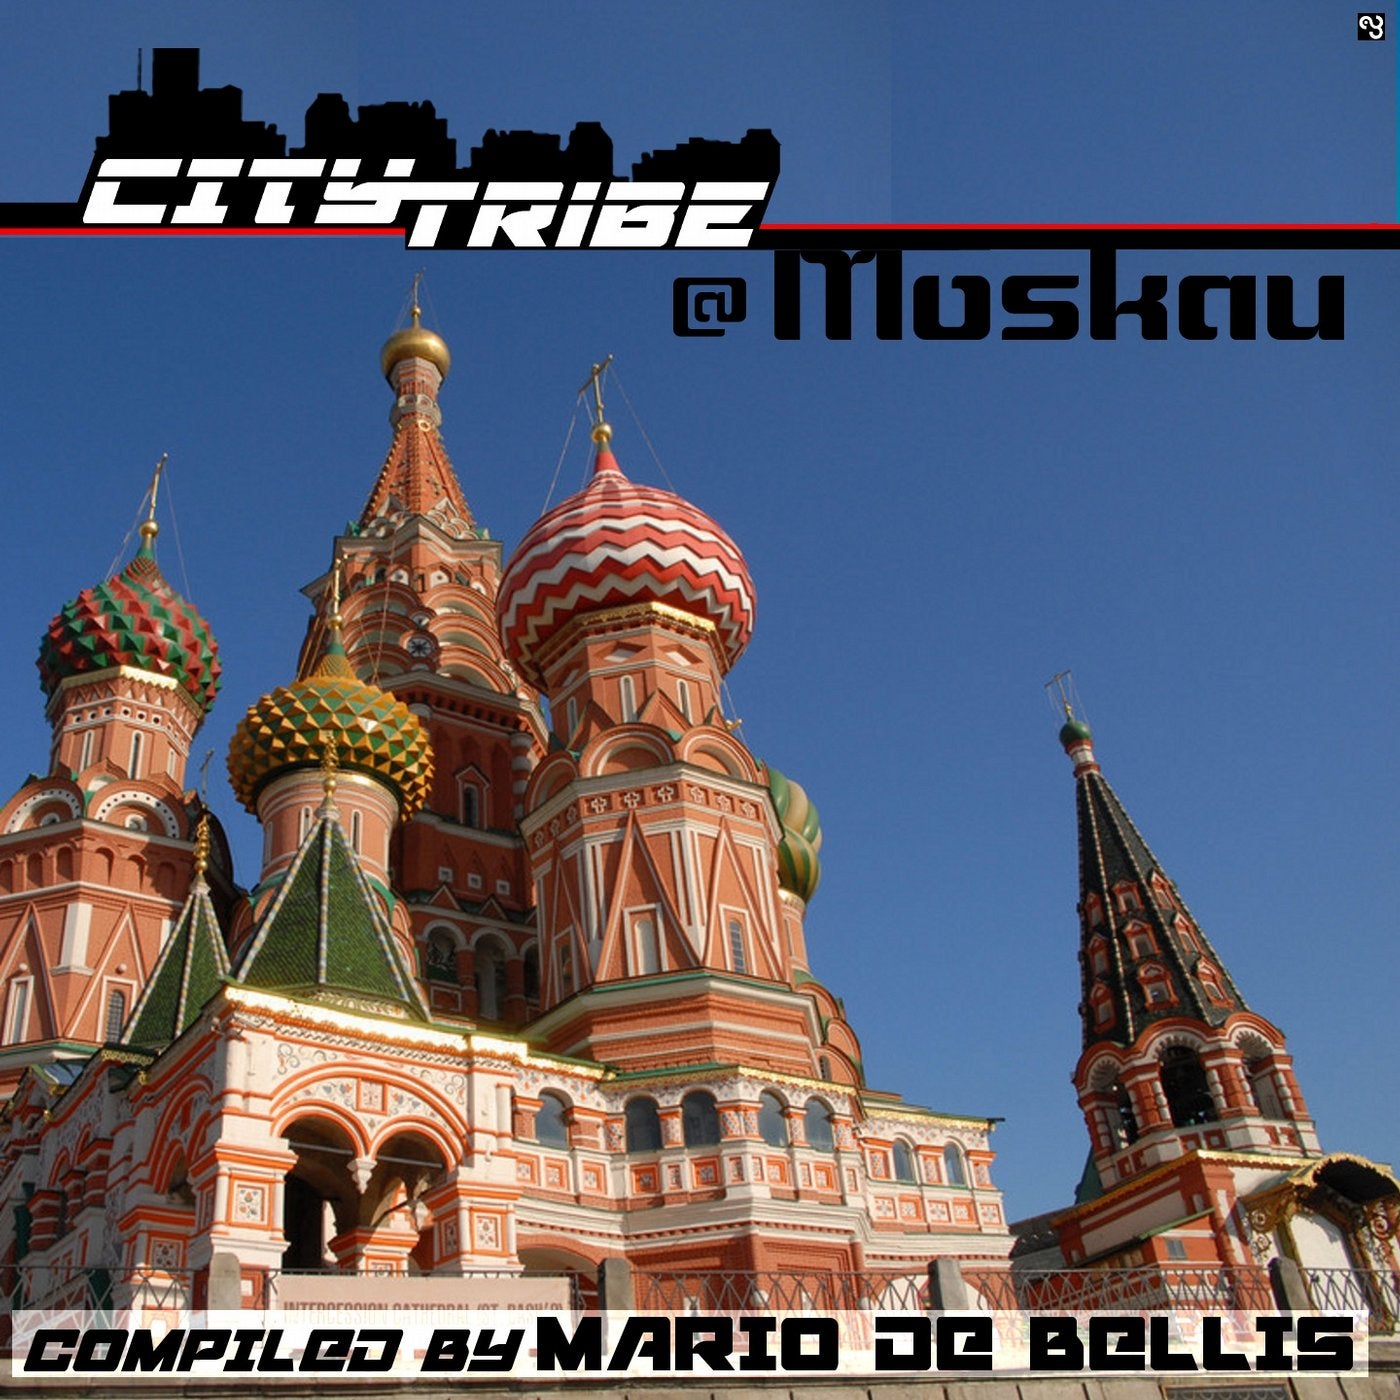 Citytribe @ Moskau (Compiled by Mario De Bellis)